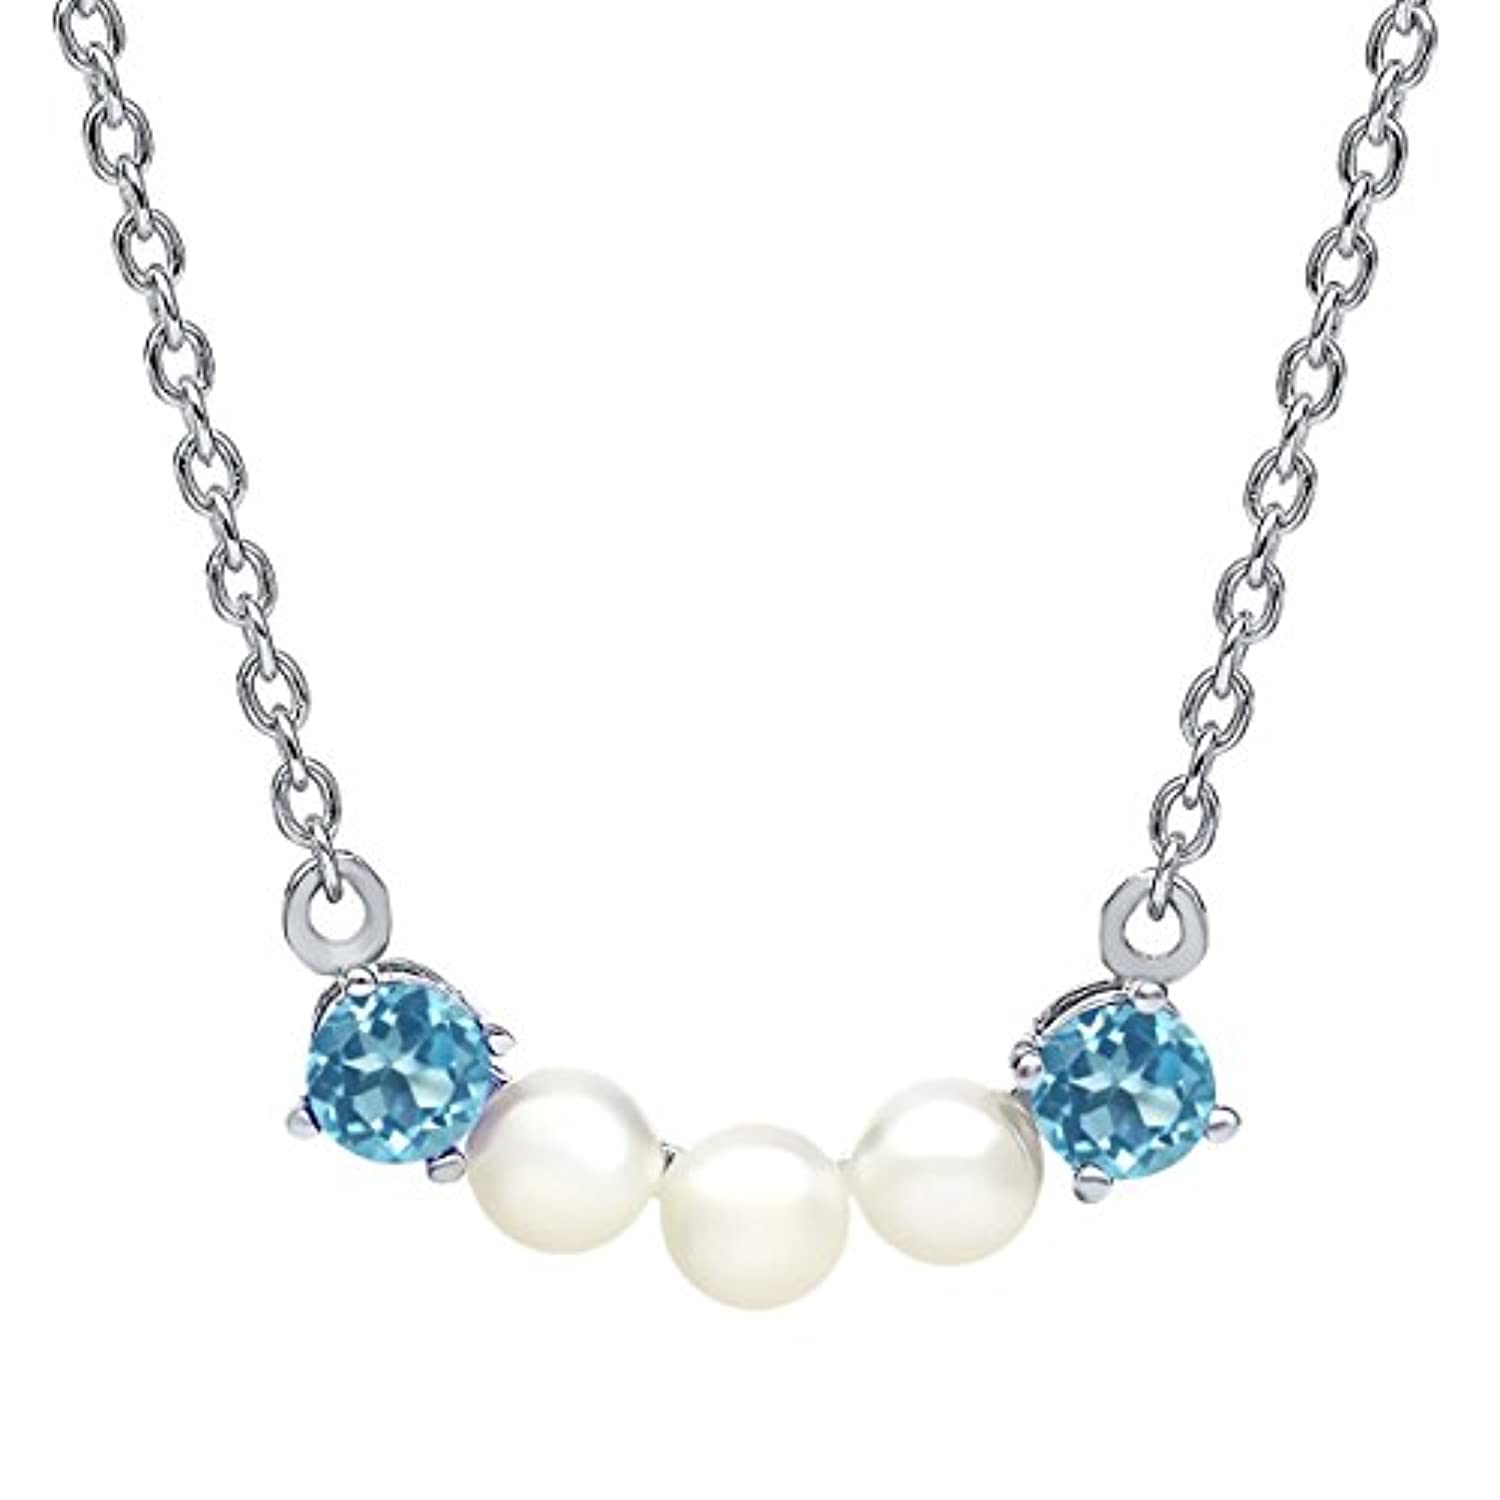 Swiss Blue Topaz Cultured Freshwater Pearls